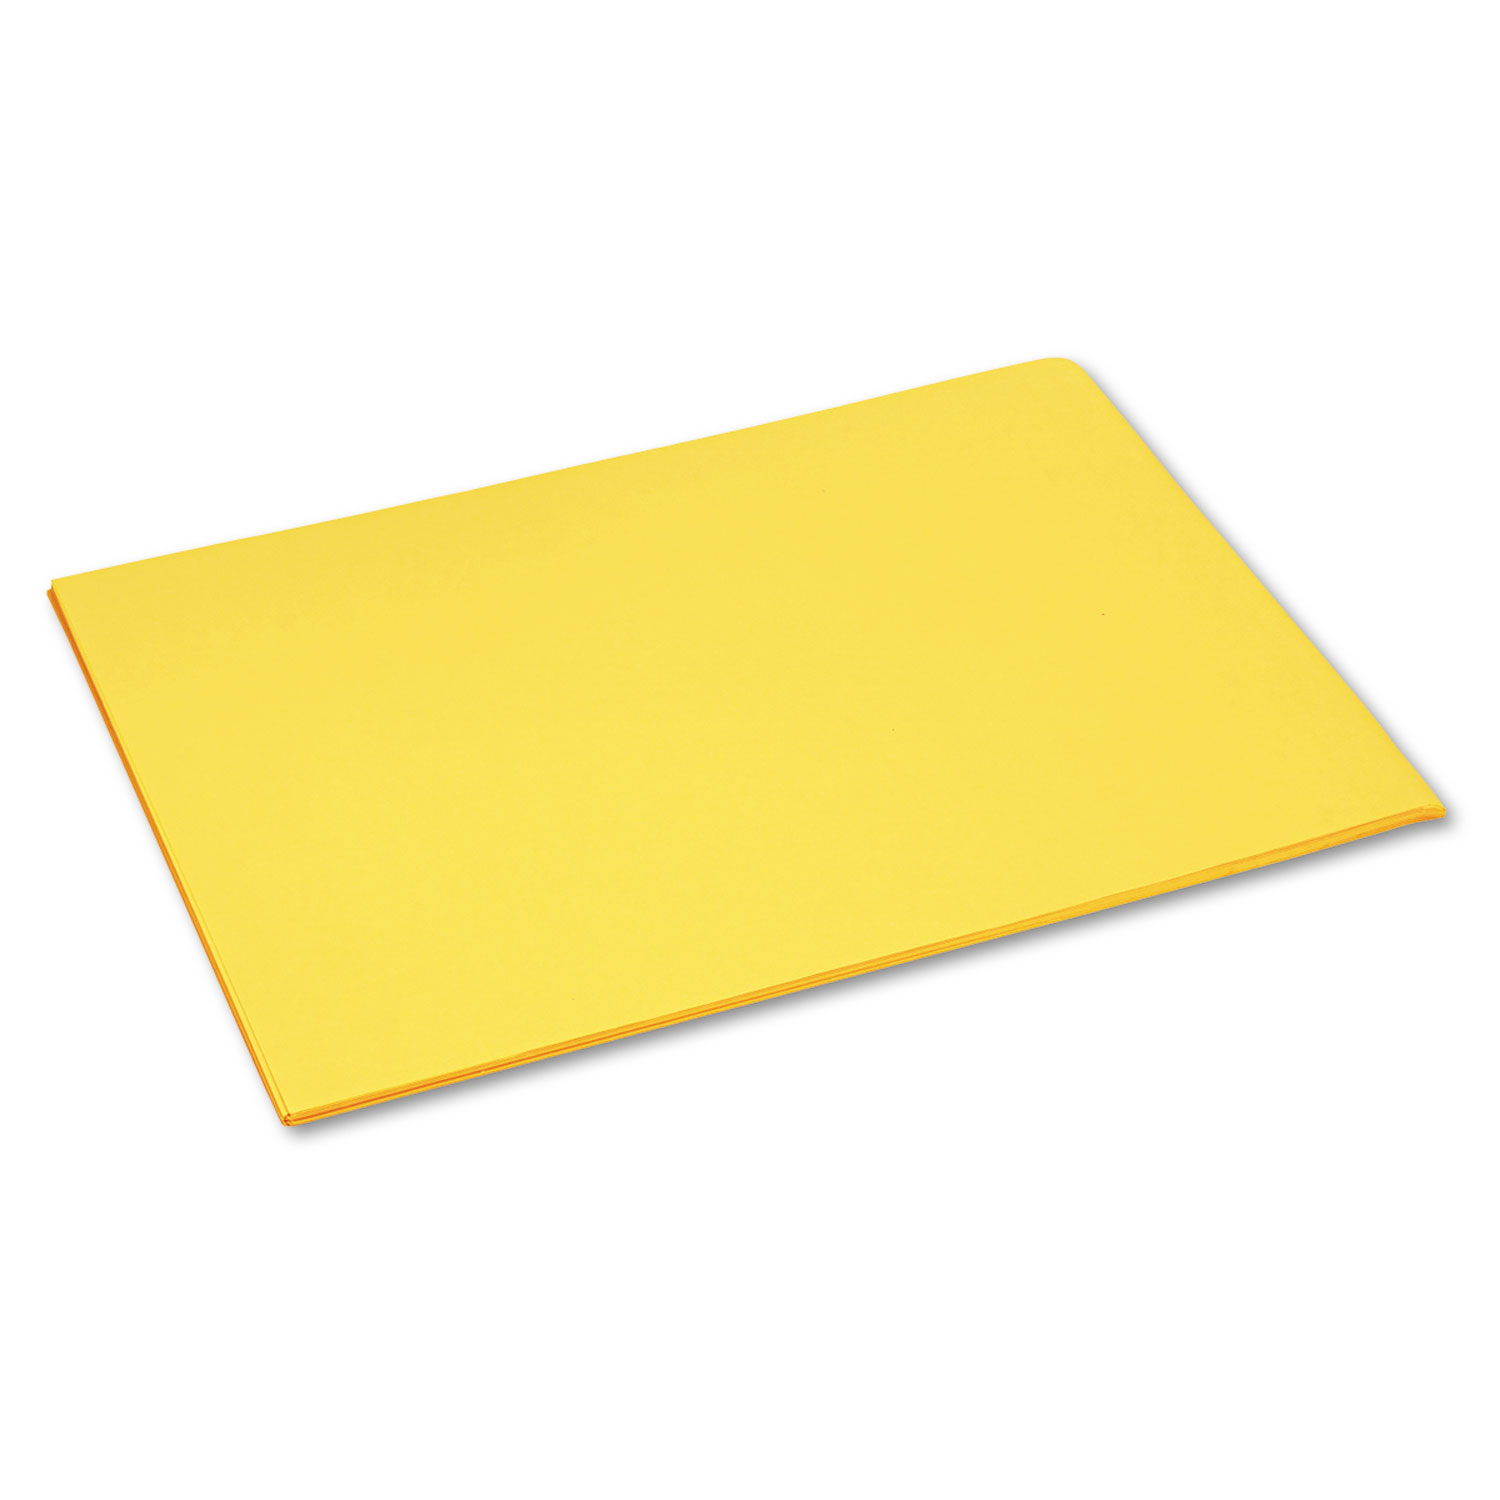  Pacon 103068 Tru-Ray Construction Paper, 76lb, 18 x 24, Yellow, 50/Pack (PAC103068) 